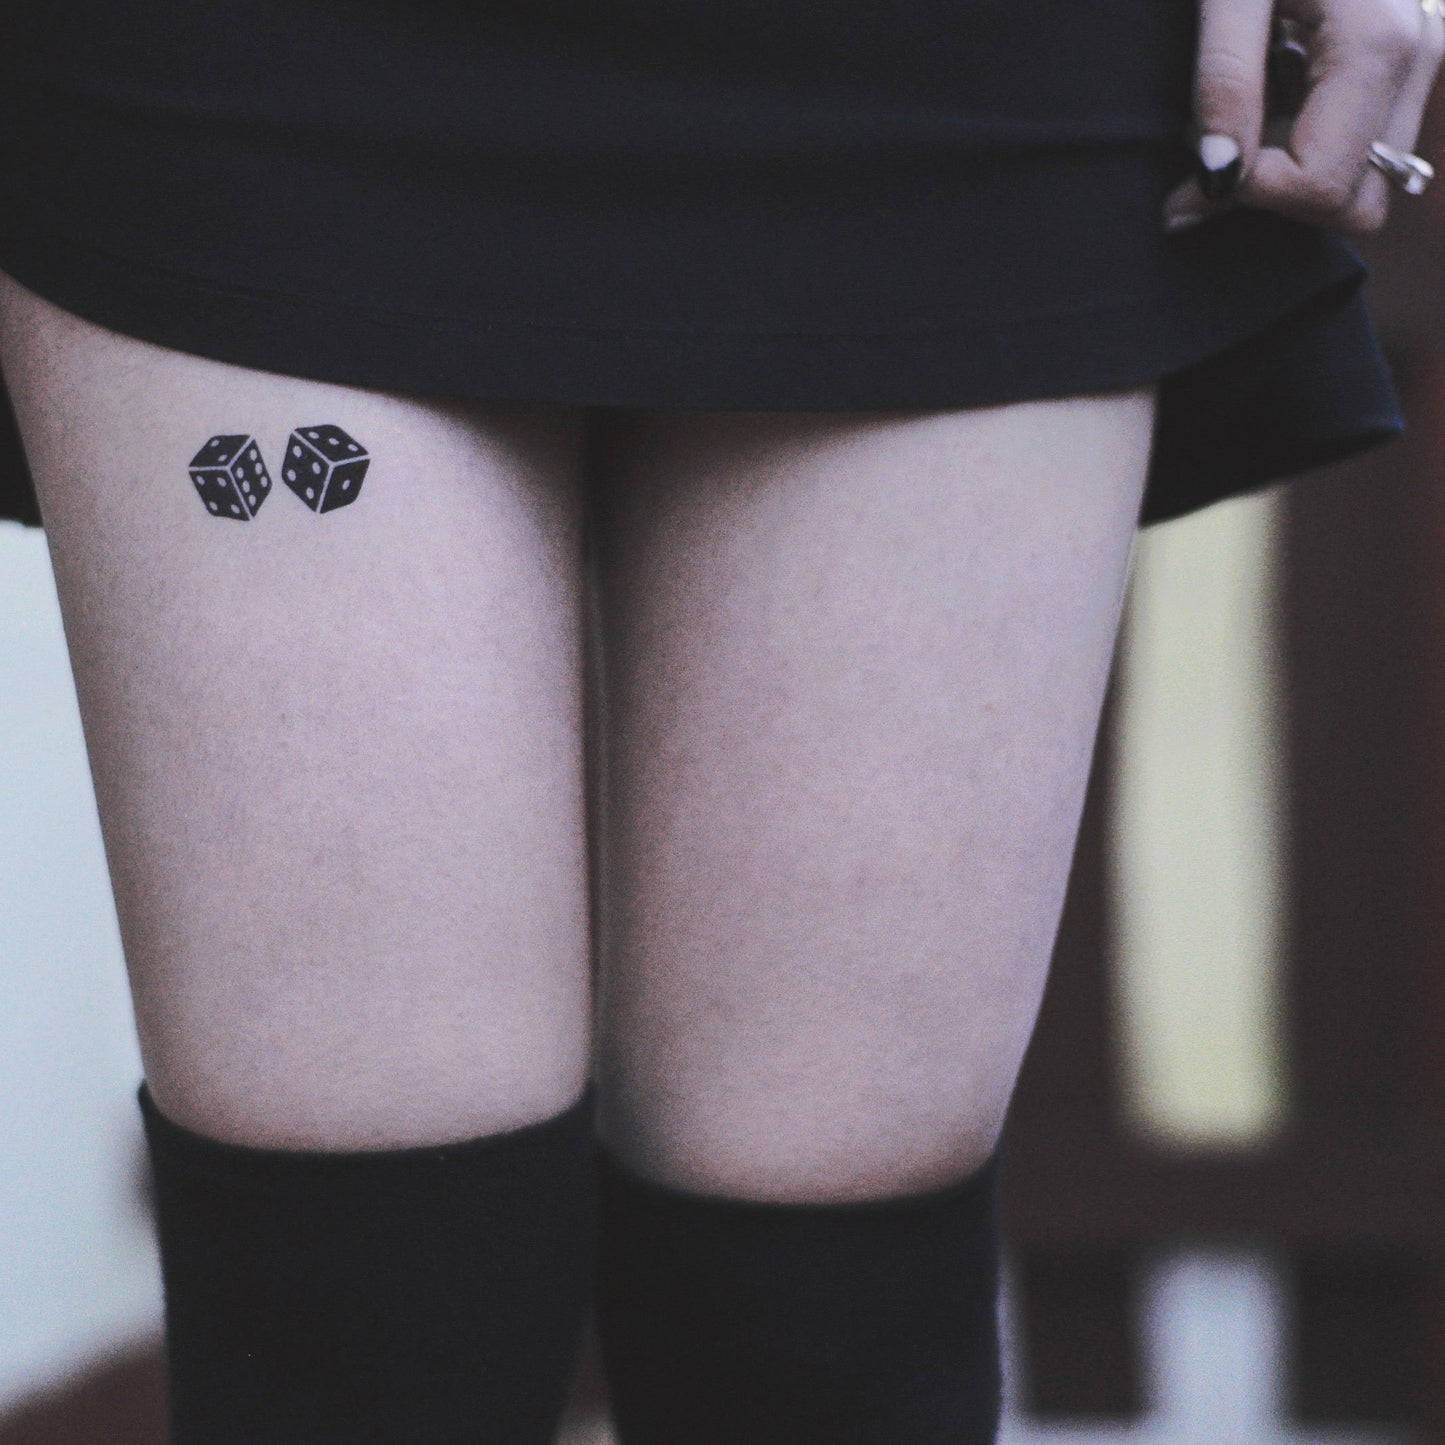 fake small dices minimalist temporary tattoo sticker design idea on thigh